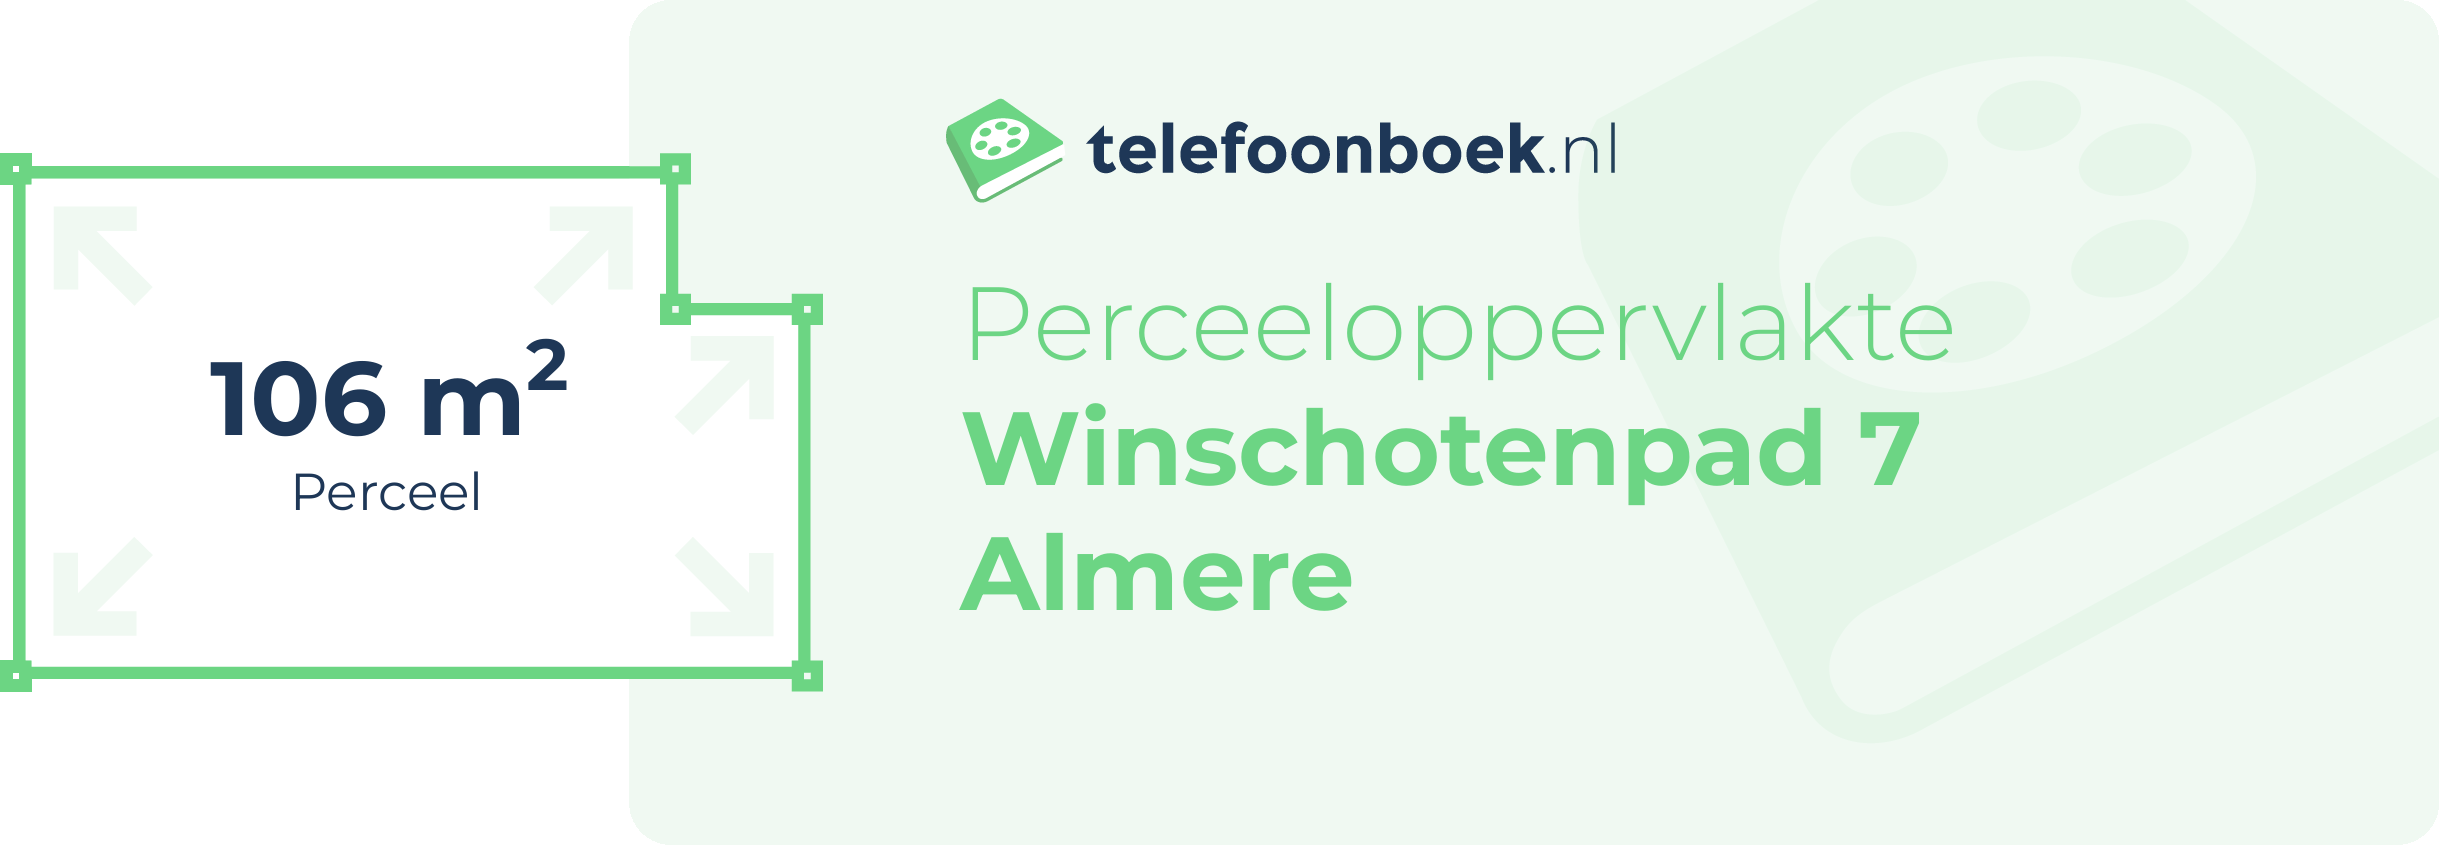 Perceeloppervlakte Winschotenpad 7 Almere